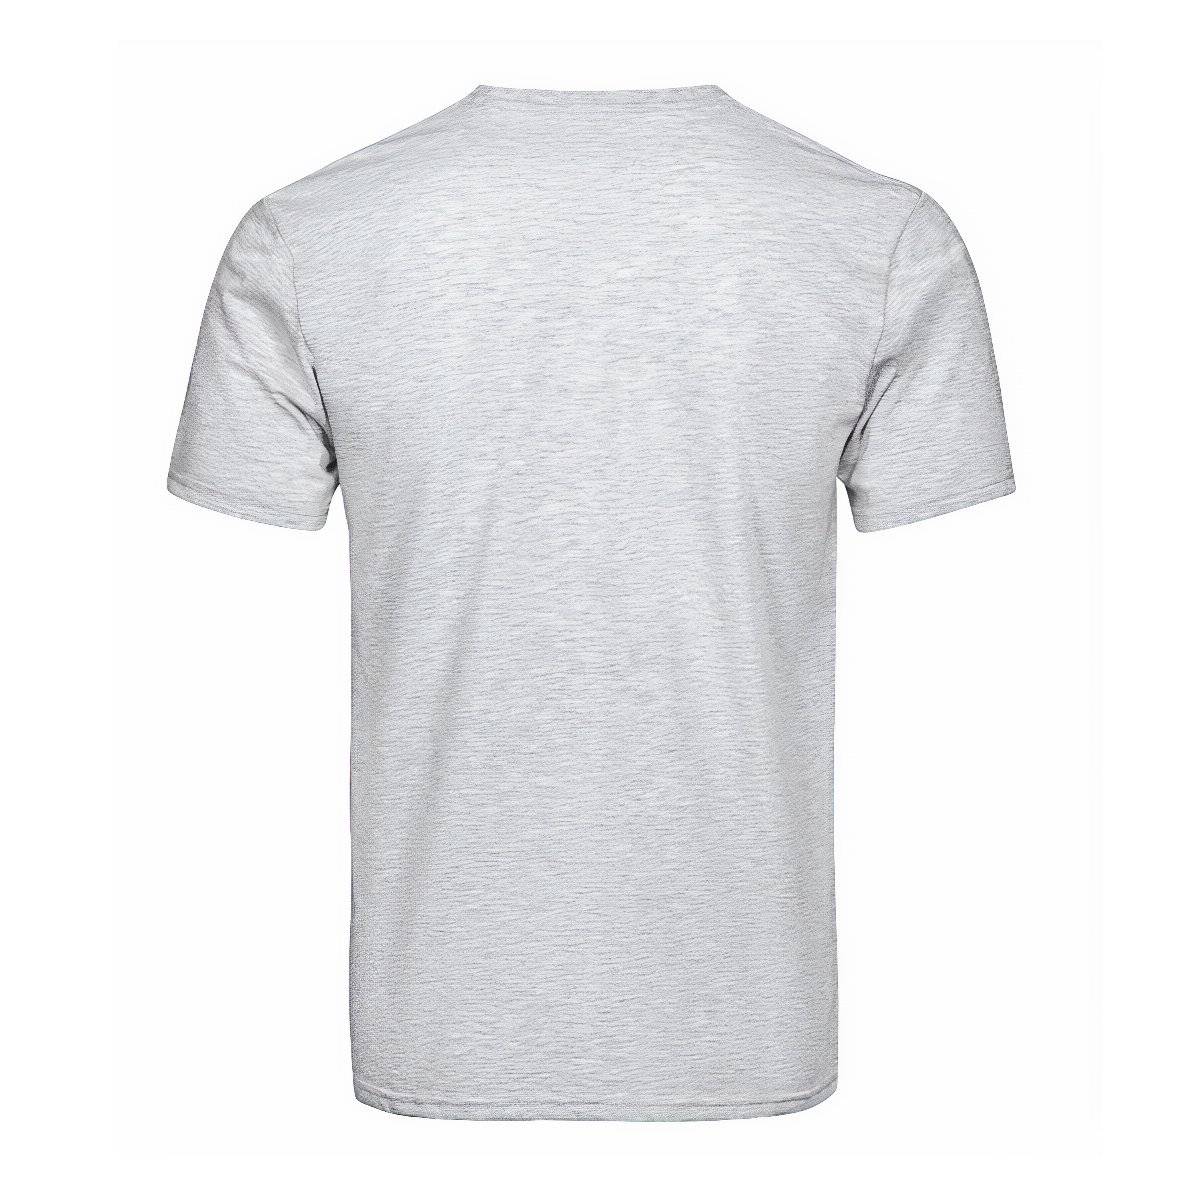 MacDonald (Clan Donald) Tartan Crest T-shirt - I'm not yelling style